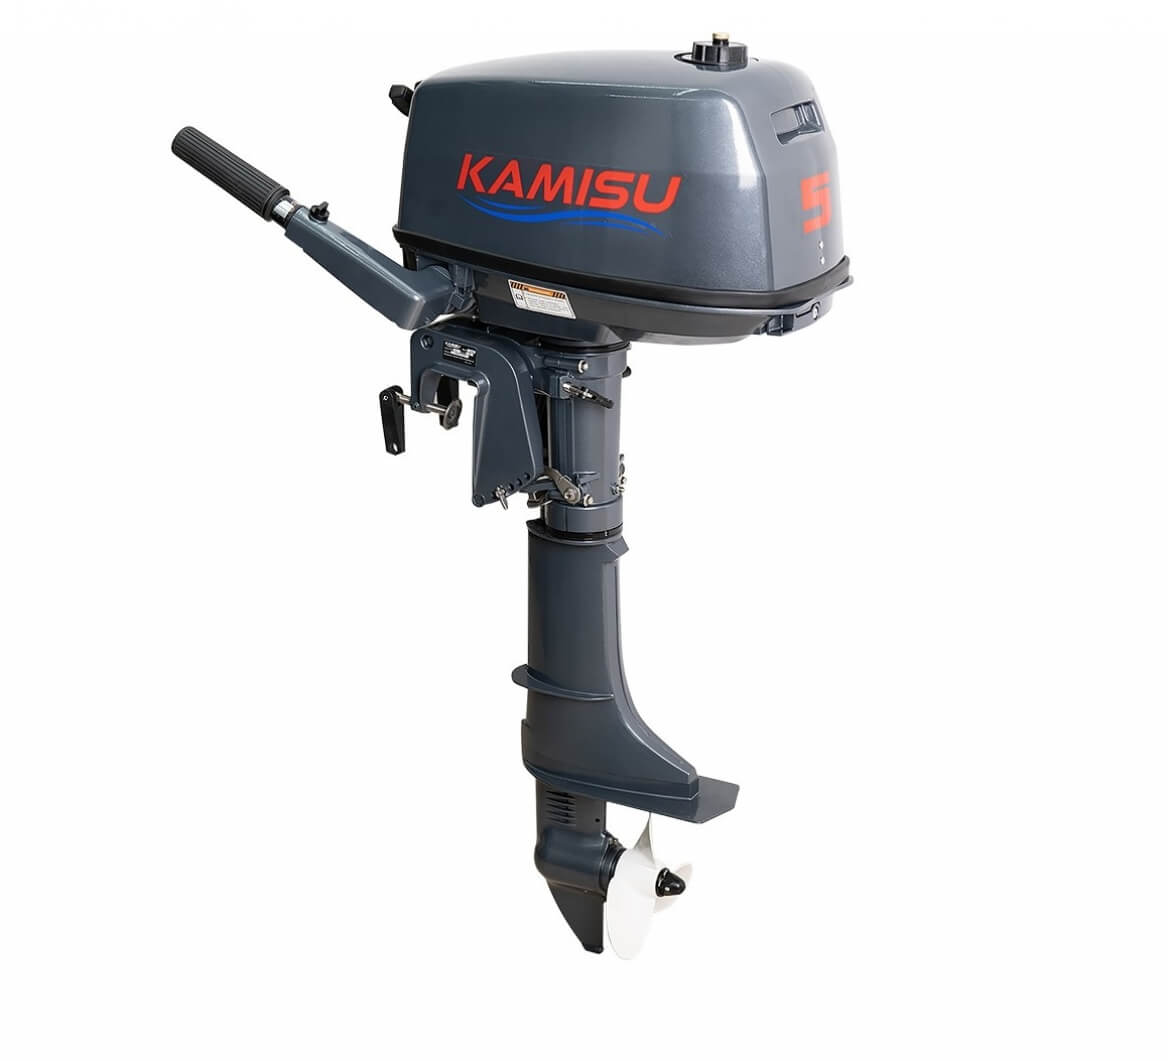 Kamisu t 9.8. Лодочный мотор Kamisu t 9.9 Pro BMS (2-Х тактный). Kamisu t 5 BMS. Лодочный мотор Kamisu t9.8BMS. Лодочный мотор Kamisu t 9.9 Pro BMS (2-Х тактный) Смоленск.